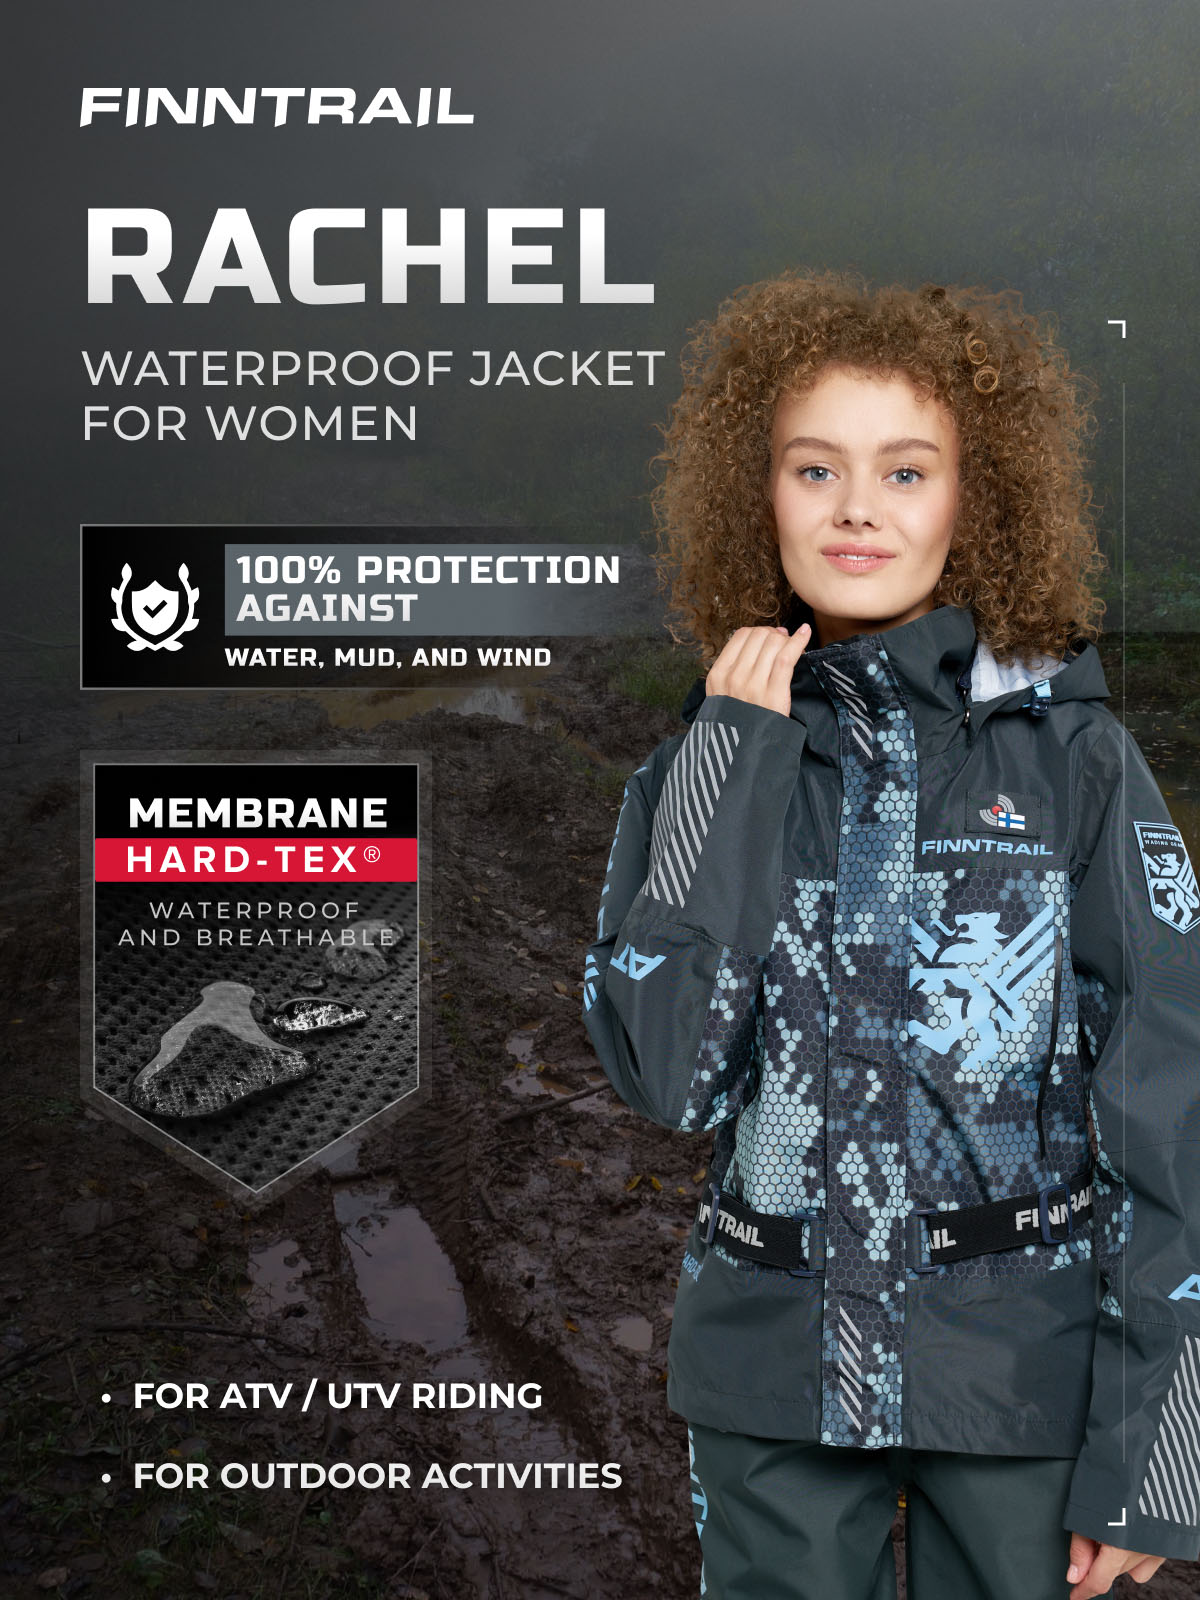 Finntrail waterproof wading jacket for ATV riding for women Rachel